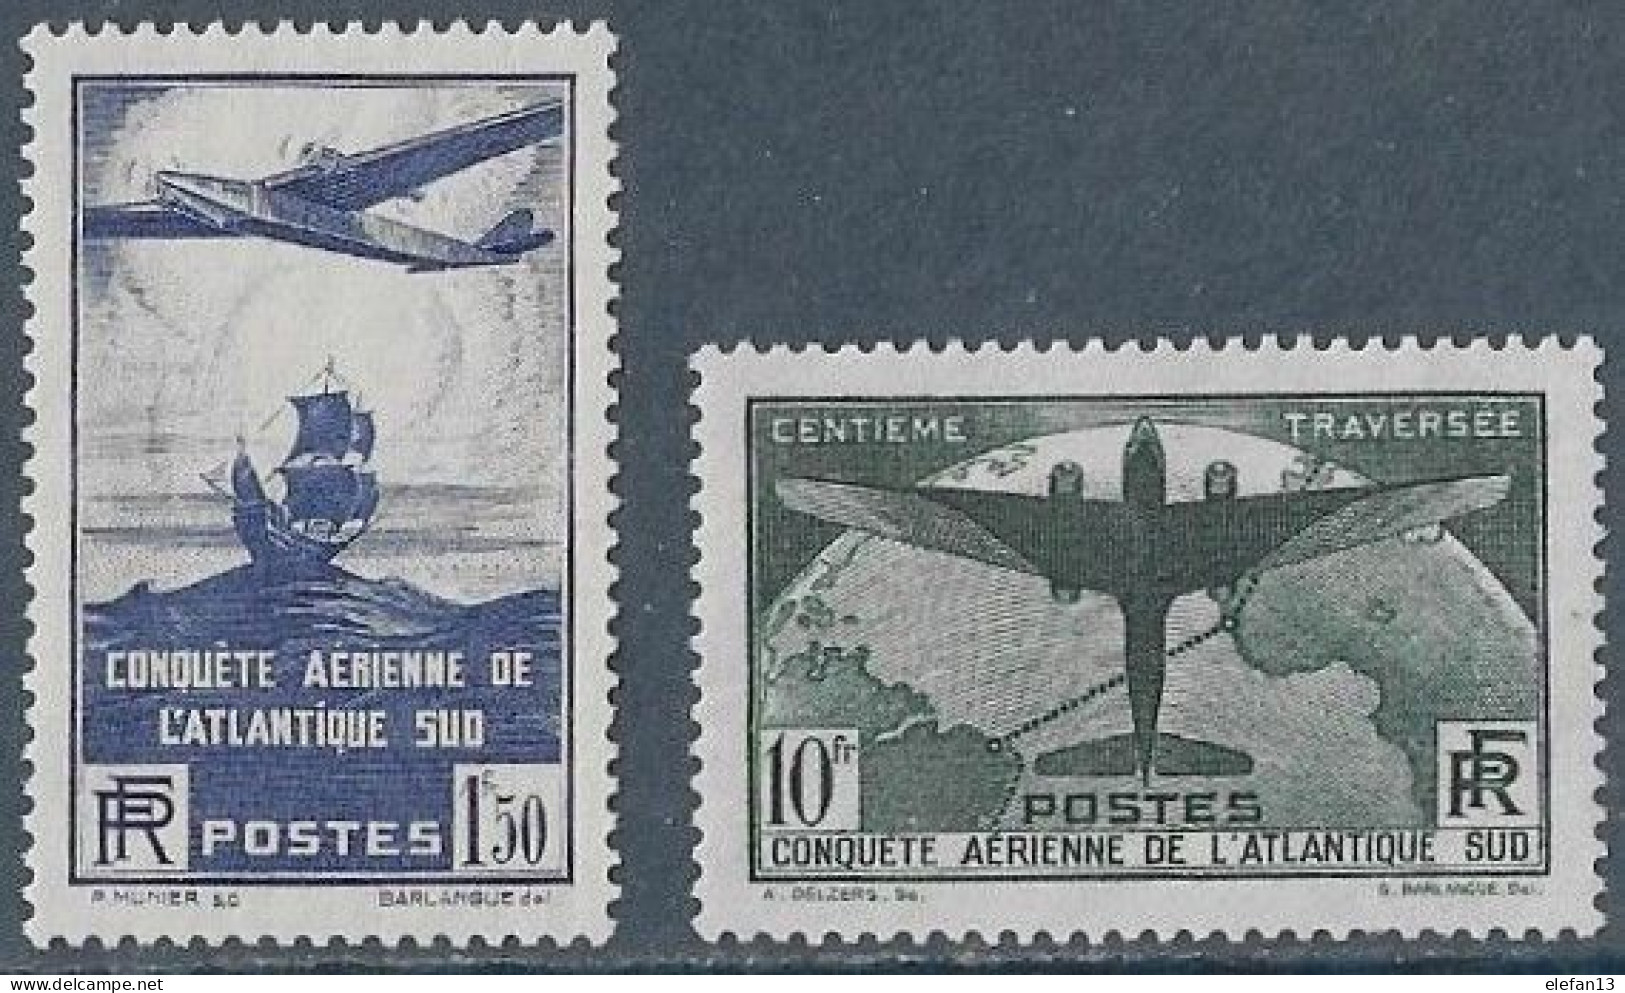 FRANCE N°320 Et 321  (*)     Neufs Sans Gomme - Unused Stamps